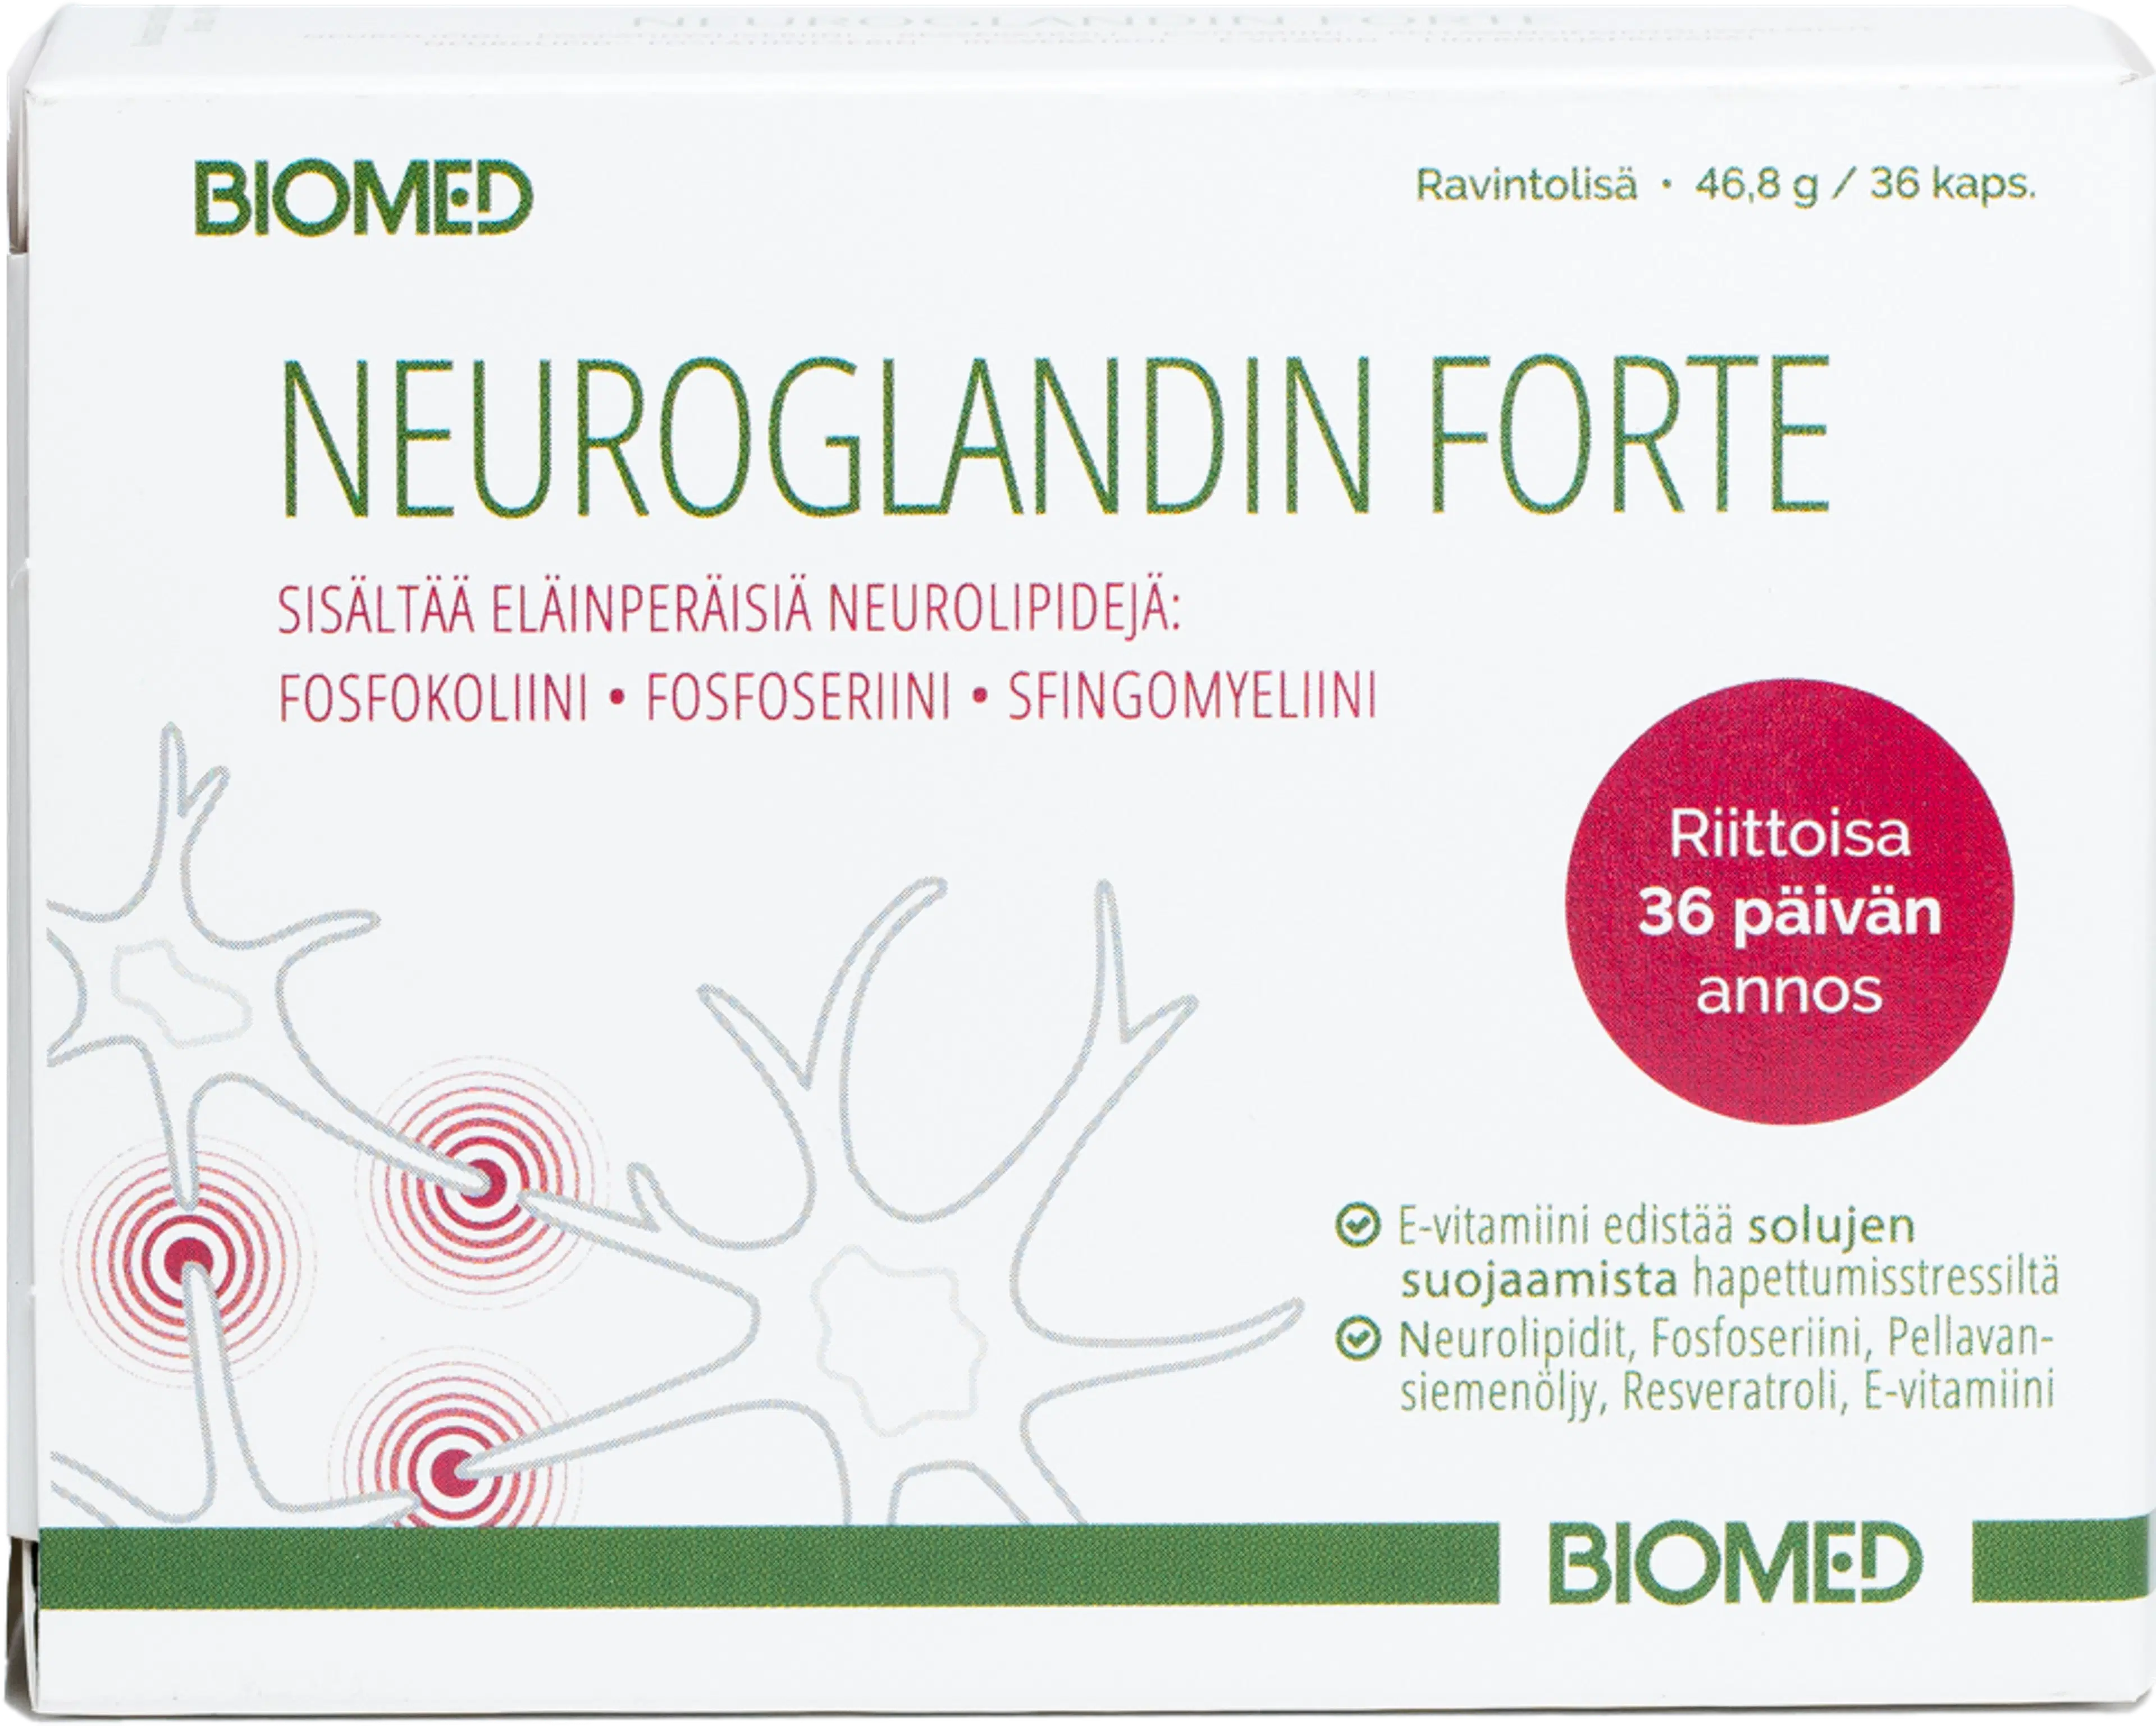 Biomed Neuroglandin forte ravintolisä 36 kaps.